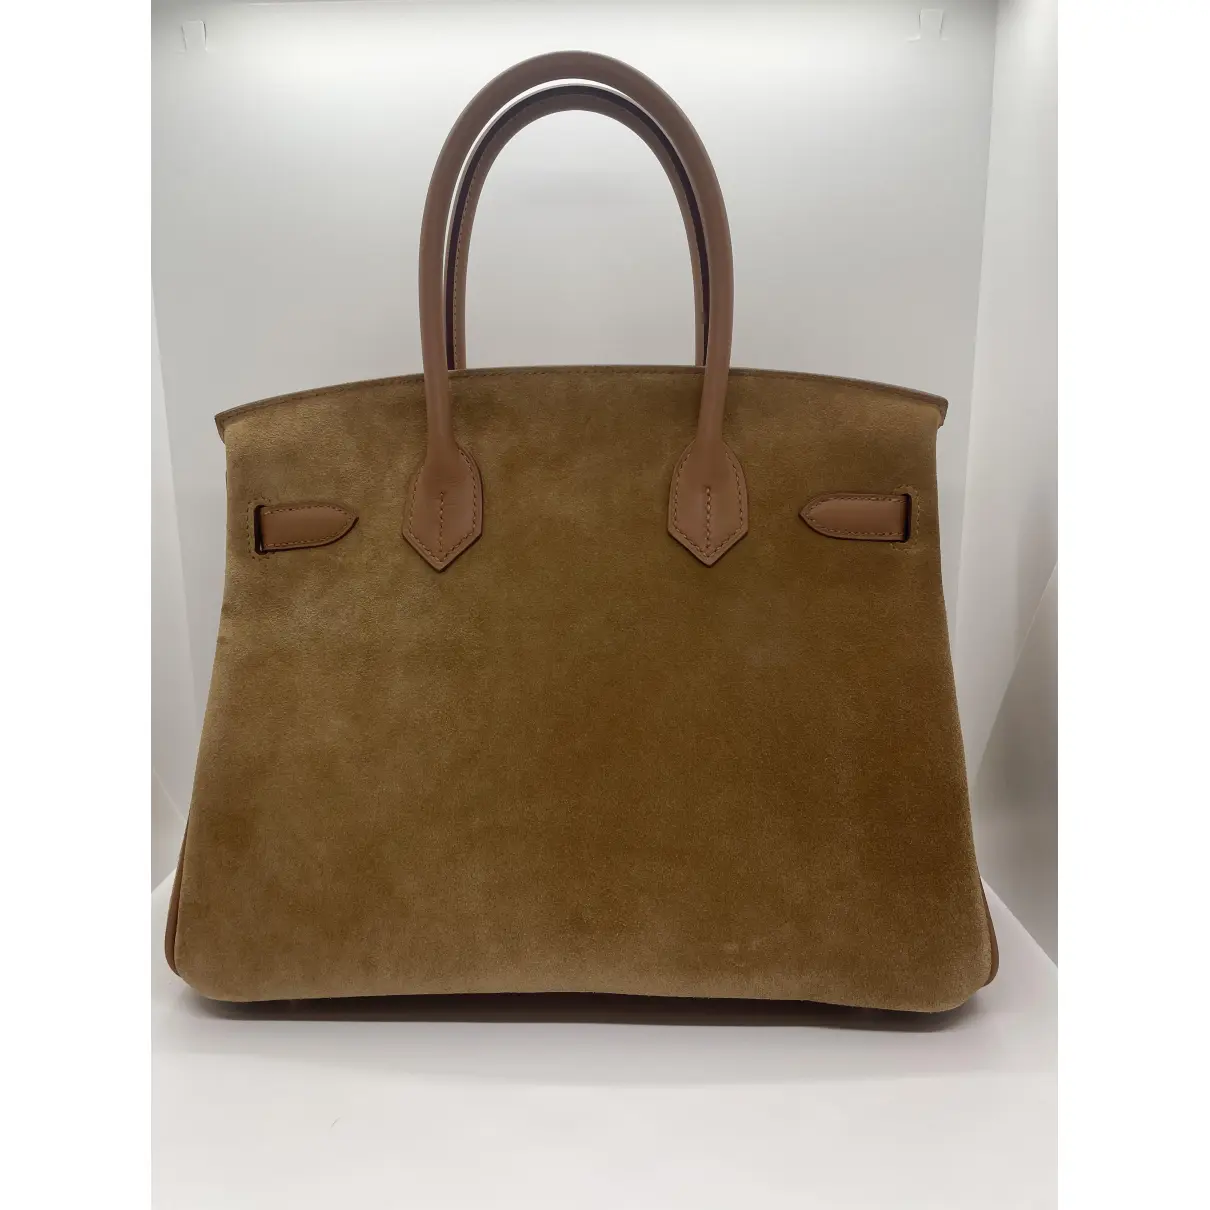 Buy Hermès Birkin 30 velvet handbag online